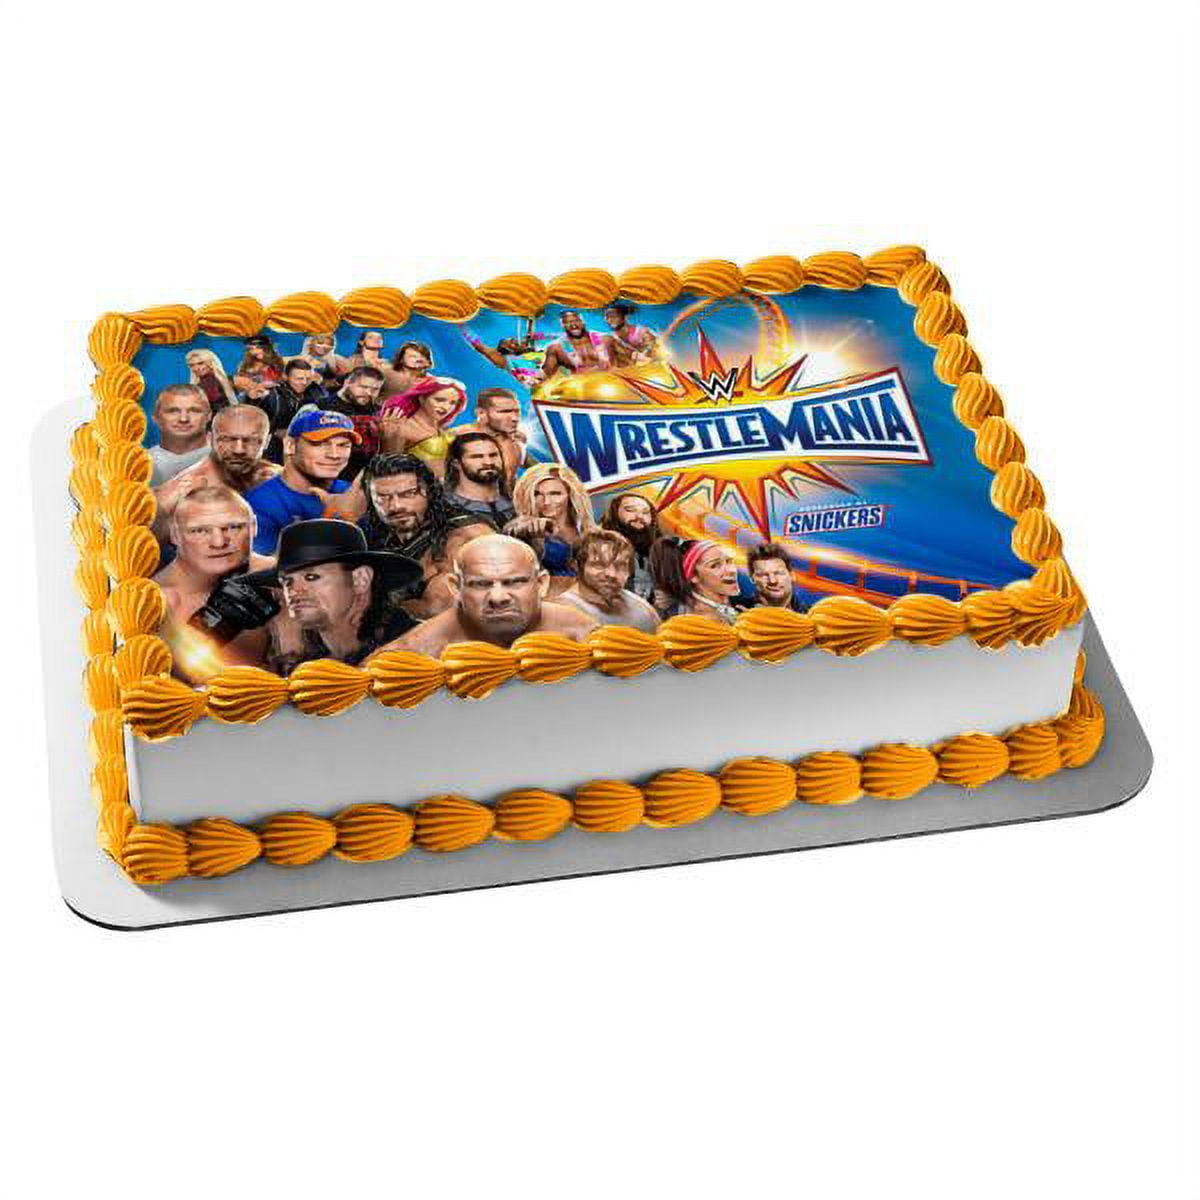 Best DIY Boxing/Wrestling Birthday Cake Kit | Cake 2 The Rescue